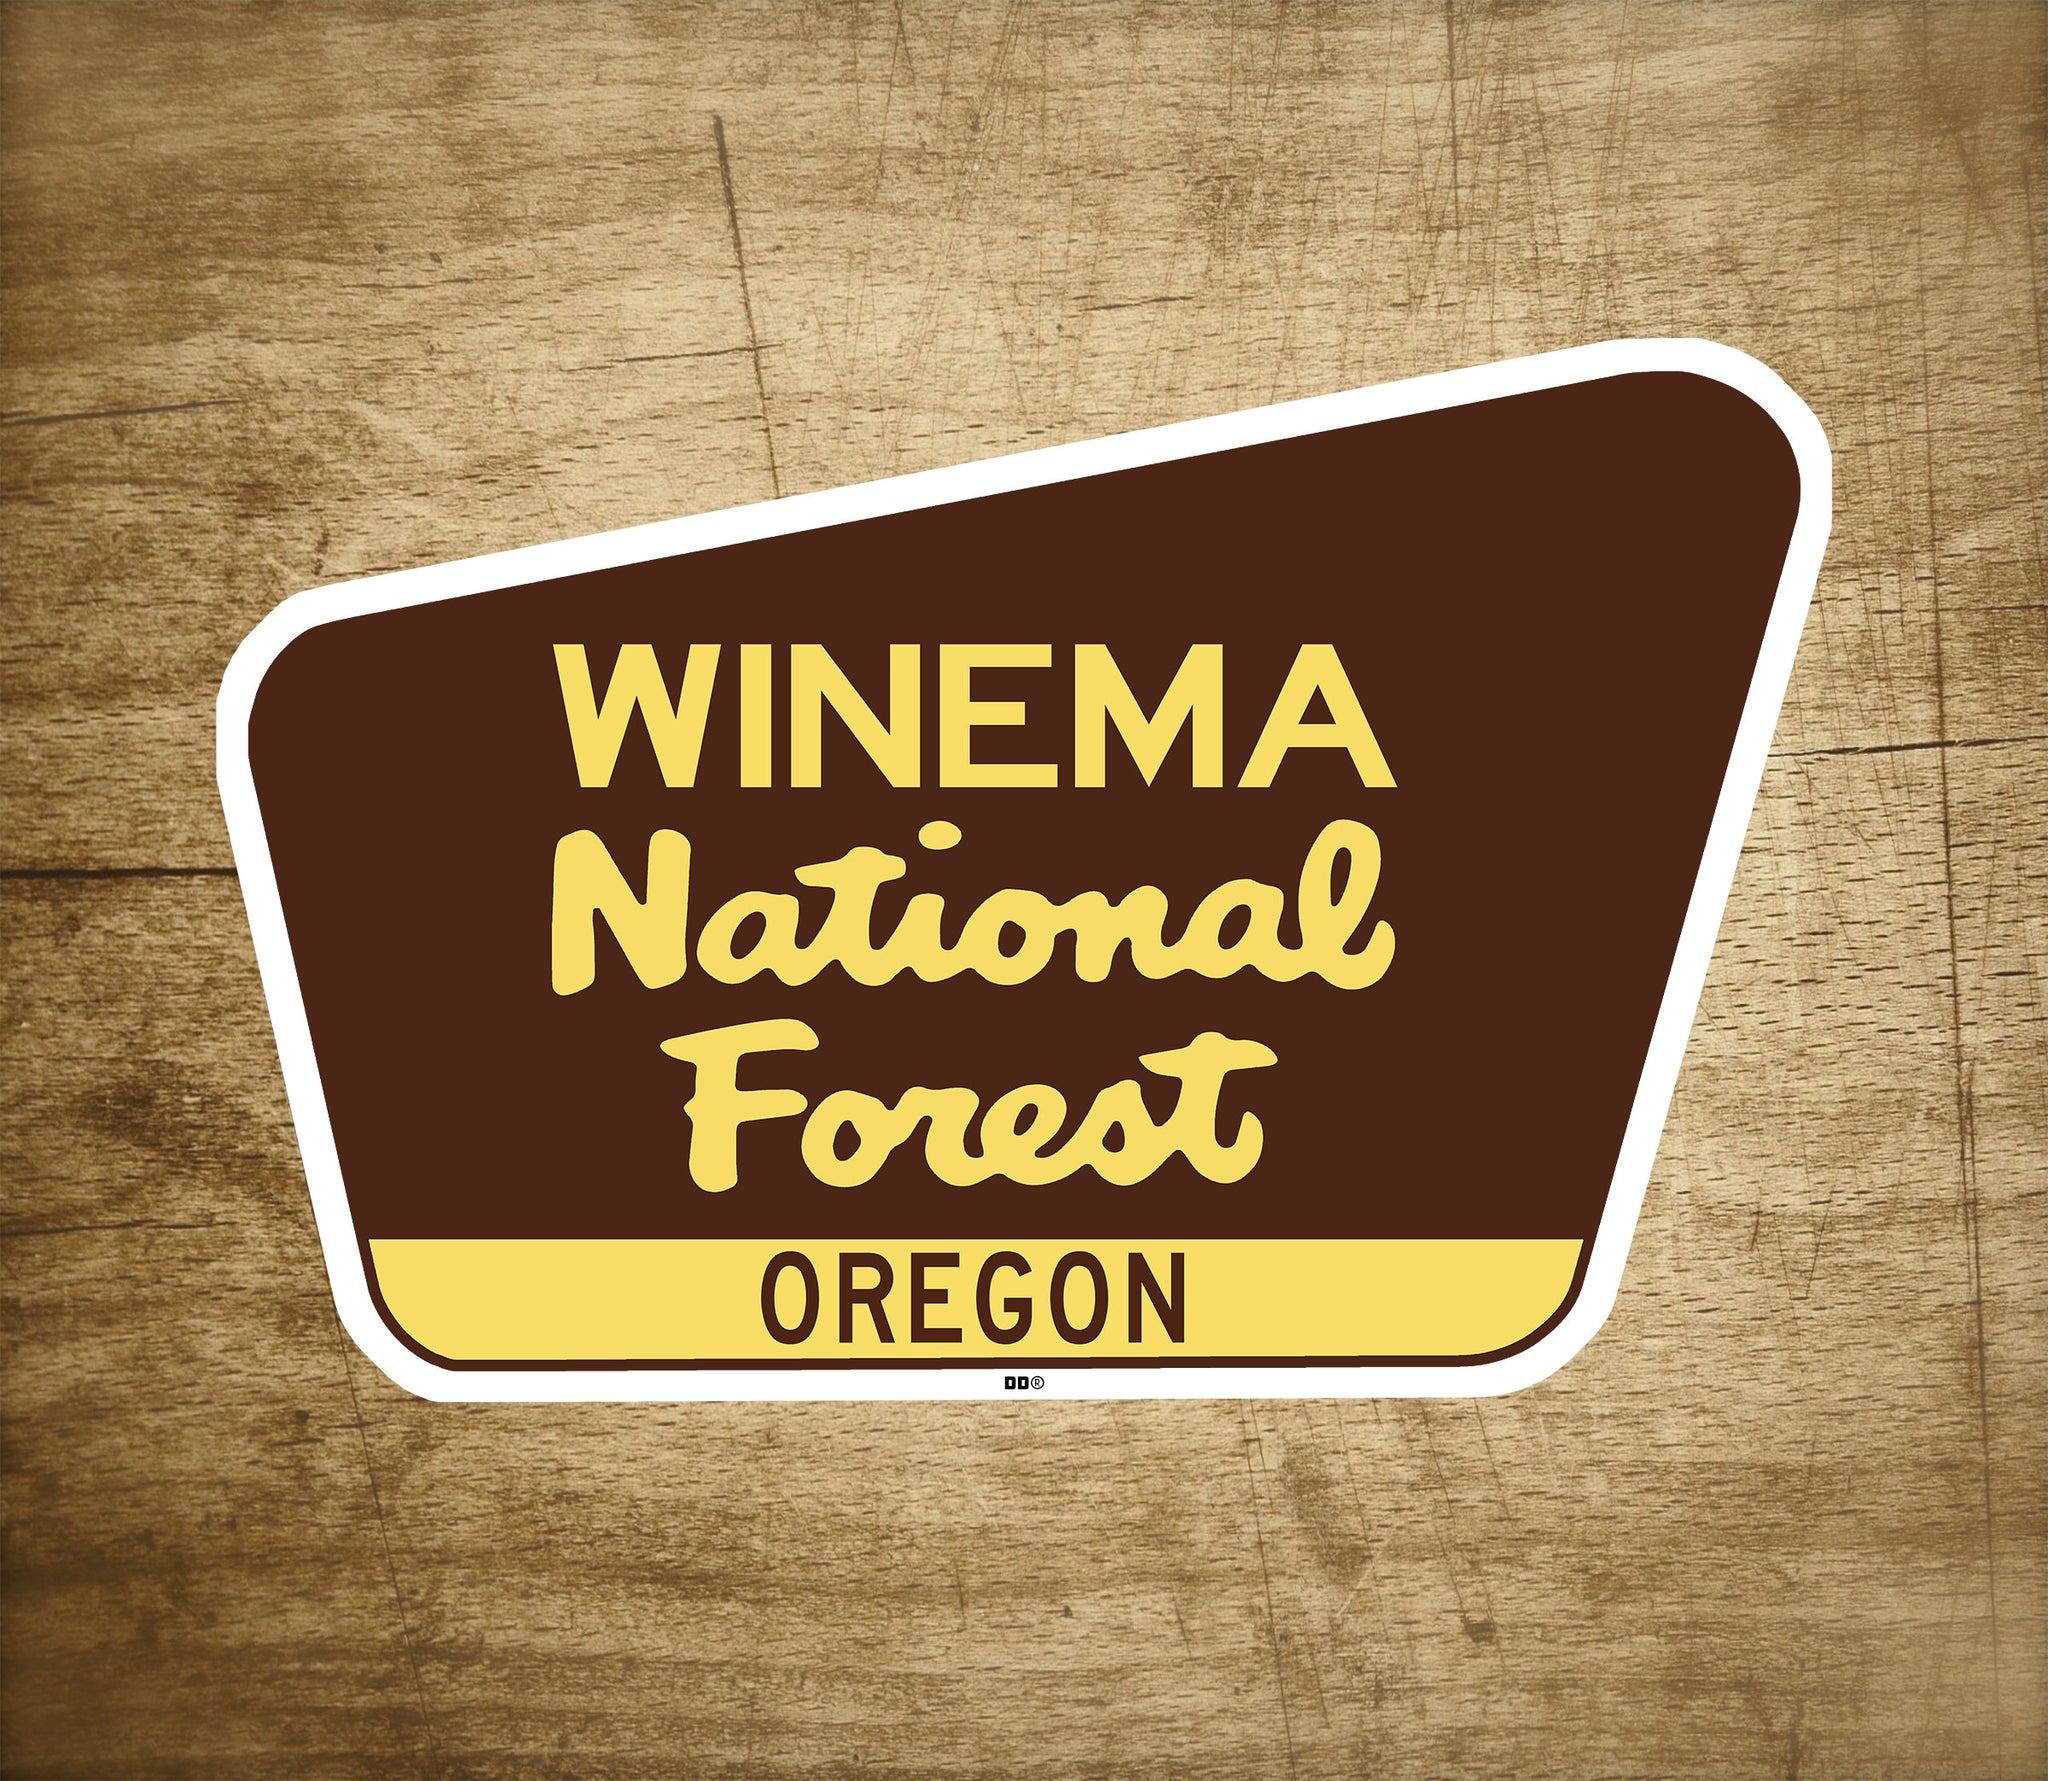 Winema National Forest Decal Sticker 3.75" x 2.5" Oregon Park Vinyl